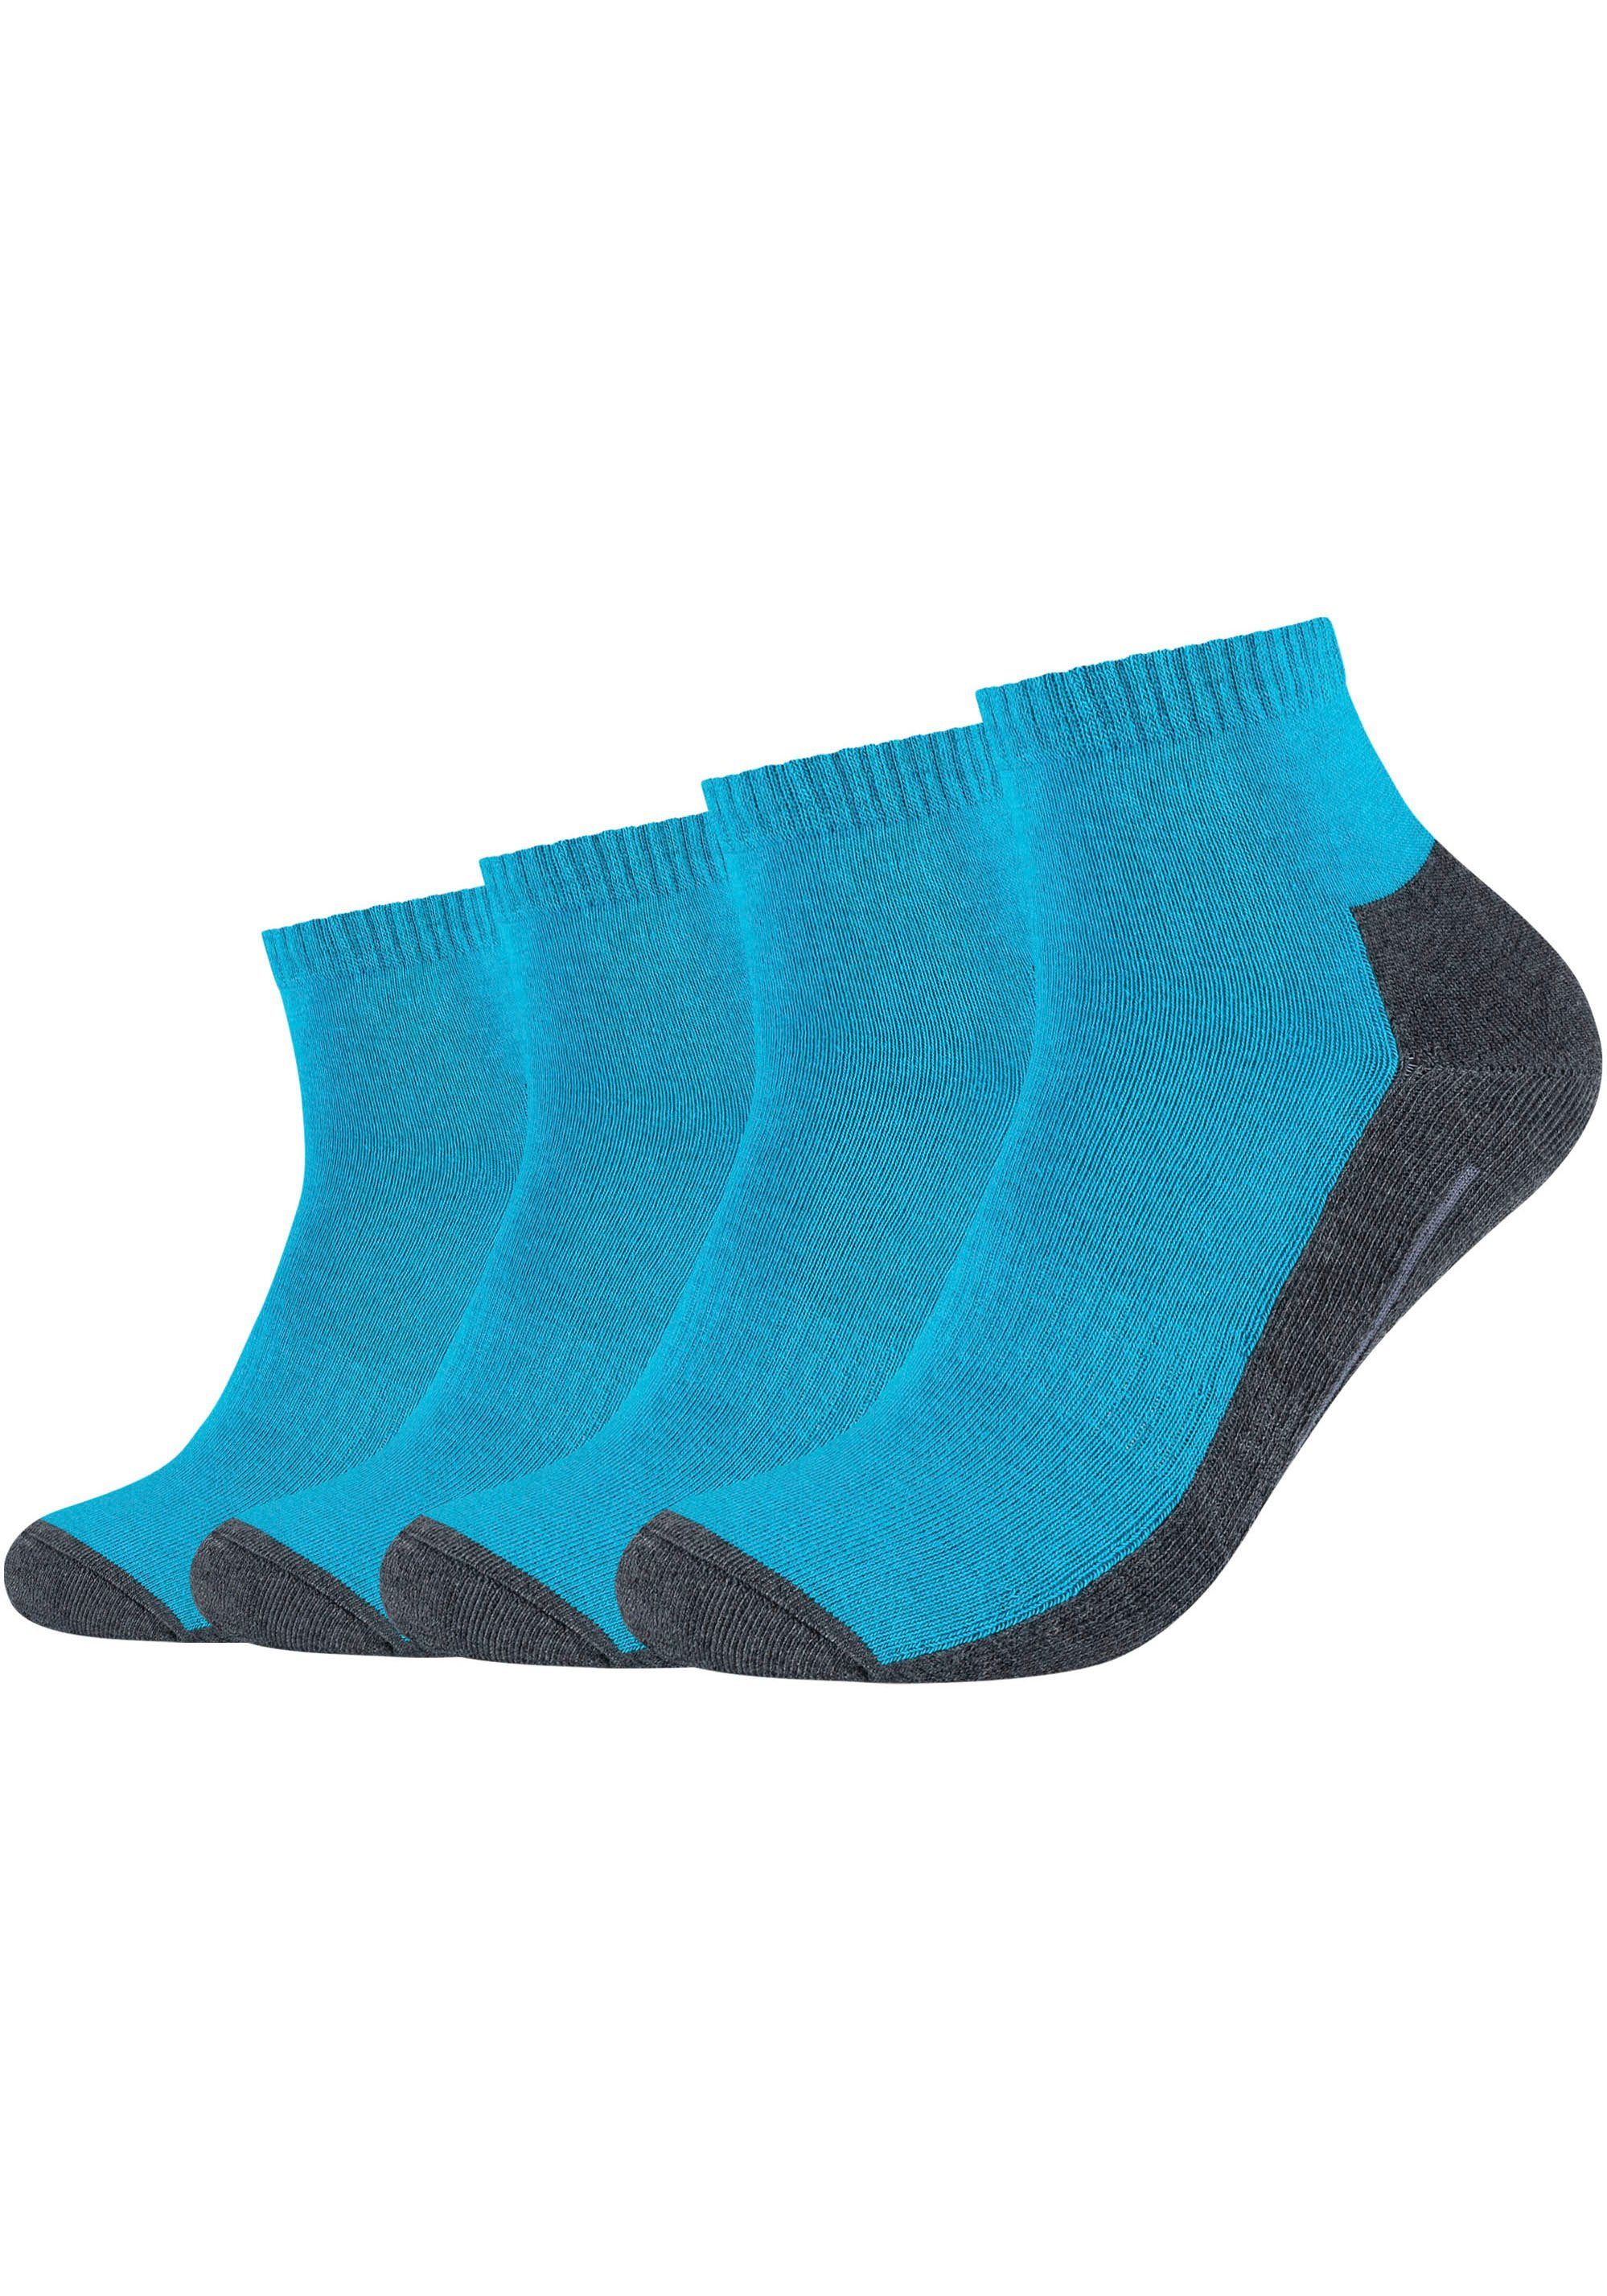 Feuchtigkeitsregulierend Camano (Packung, 4-Paar) Sportsocken turquoise-grau